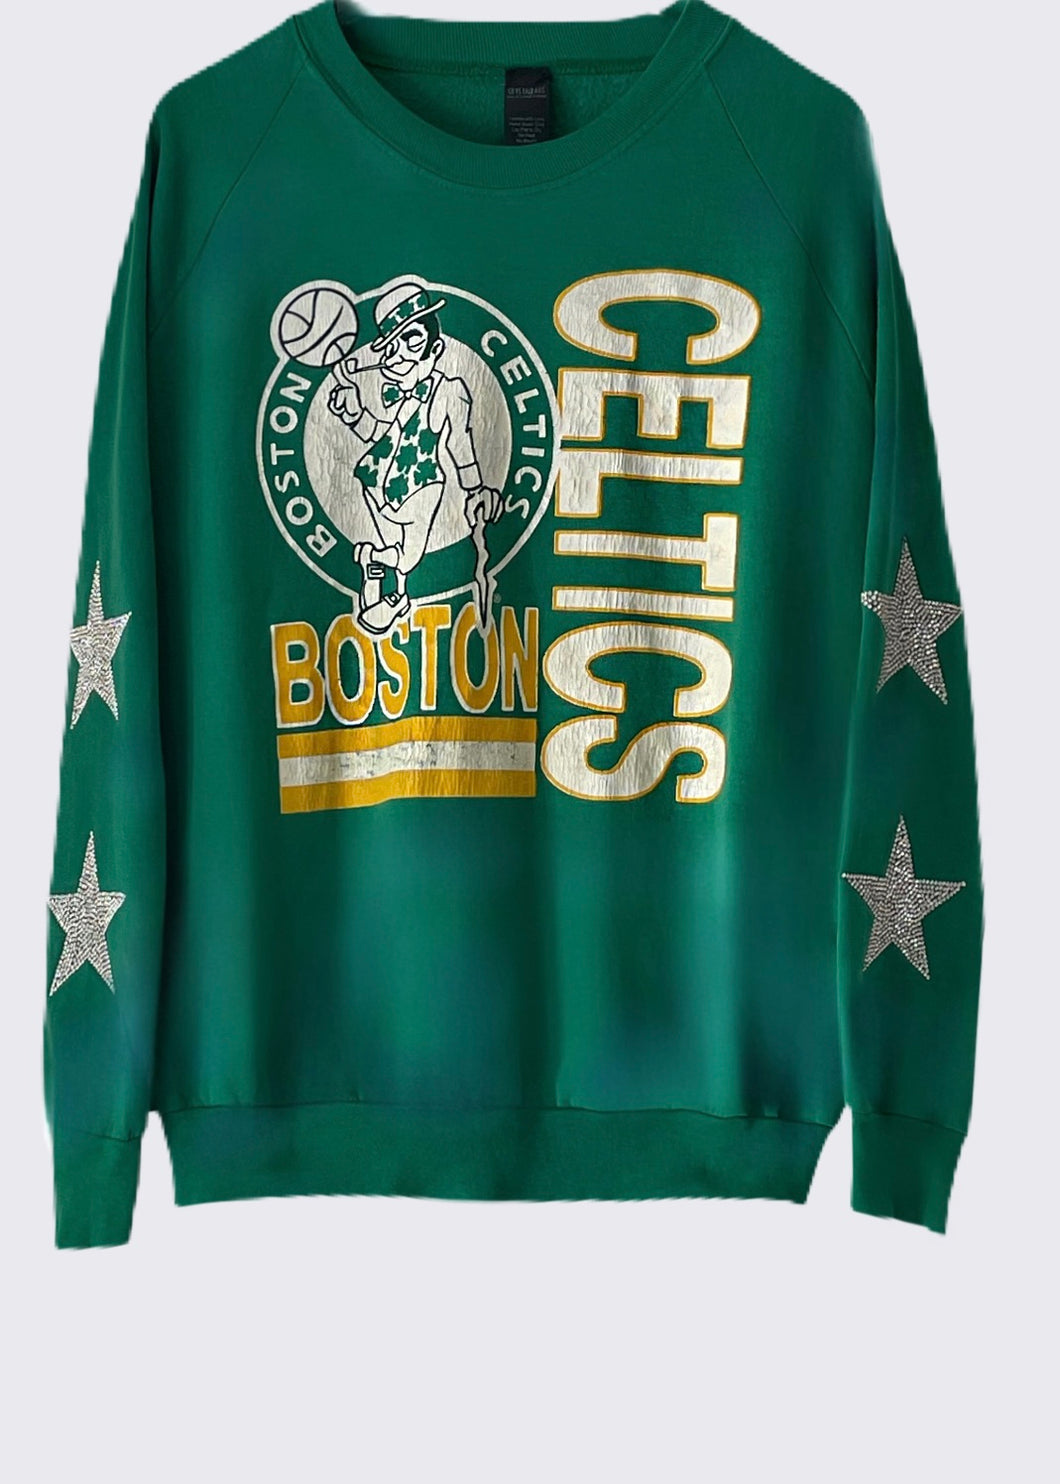 Boston Celtics, NBA One of a KIND Vintage Sweatshirt with Crystal Star Design